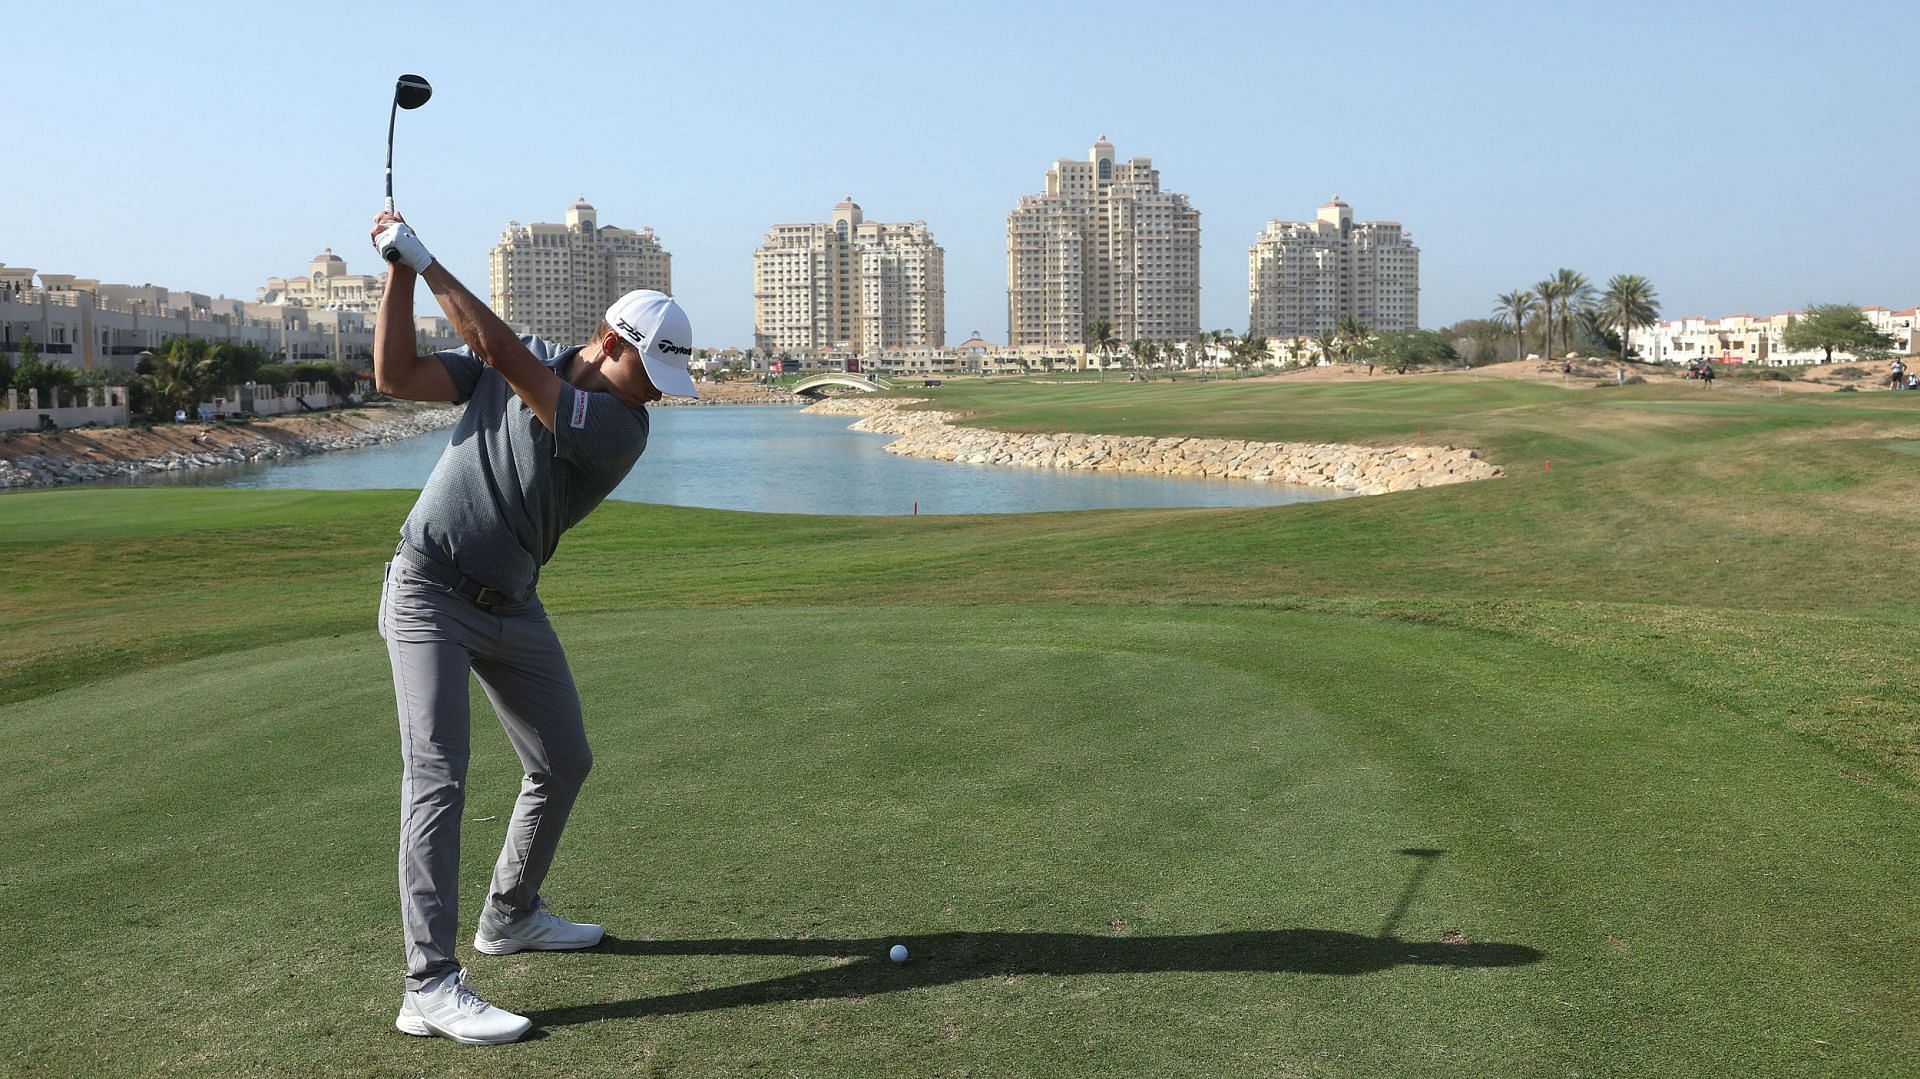 Ryder Cup Challenge at Al Hamra Golf Club saw Team Europe v Rest of the World